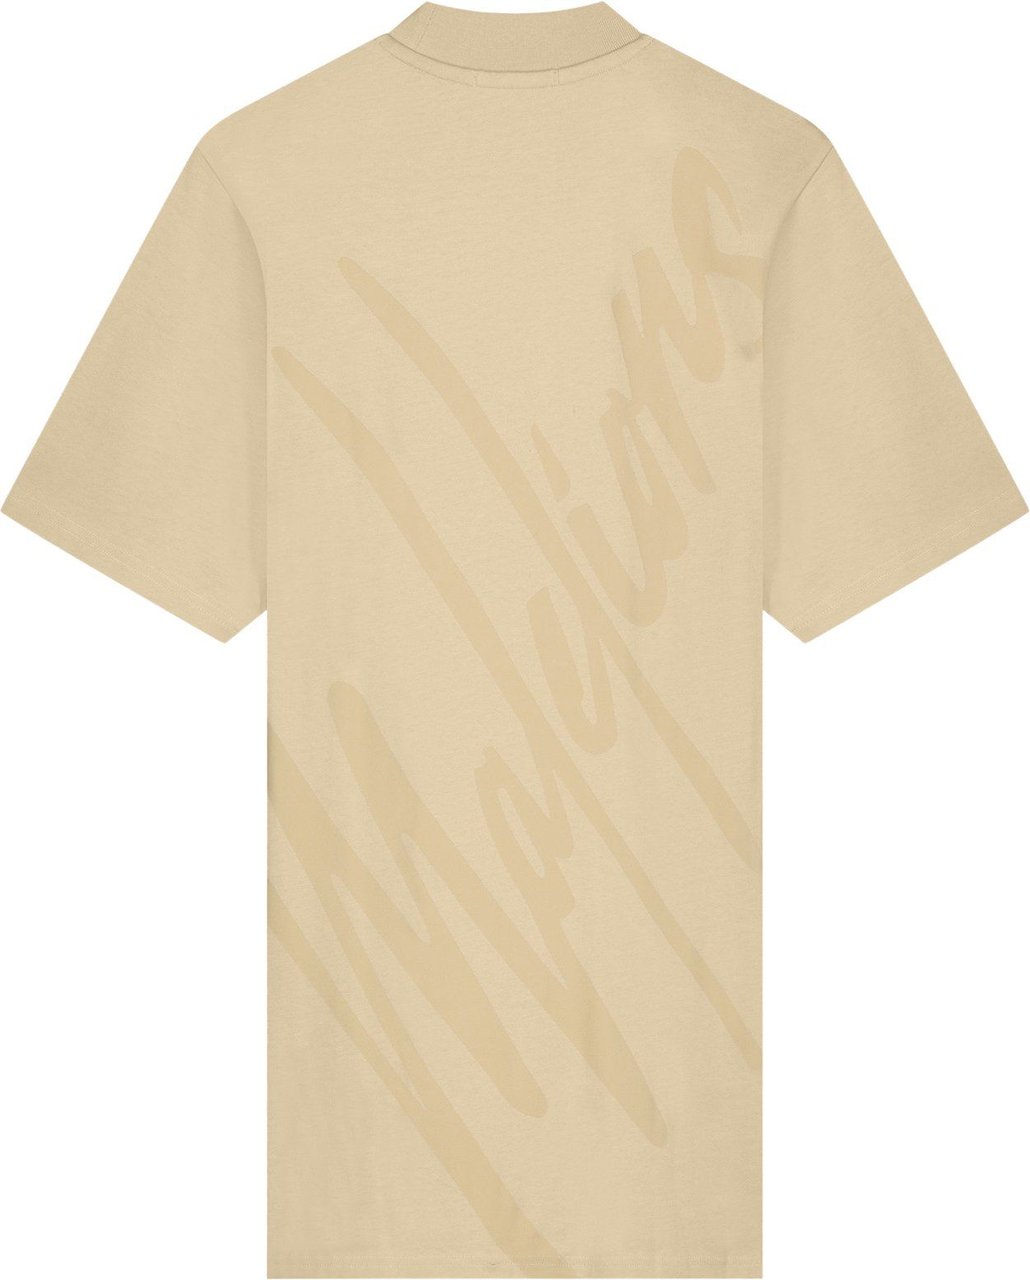 Malelions Firma T-Shirt Dress - Sand/Taupe Beige